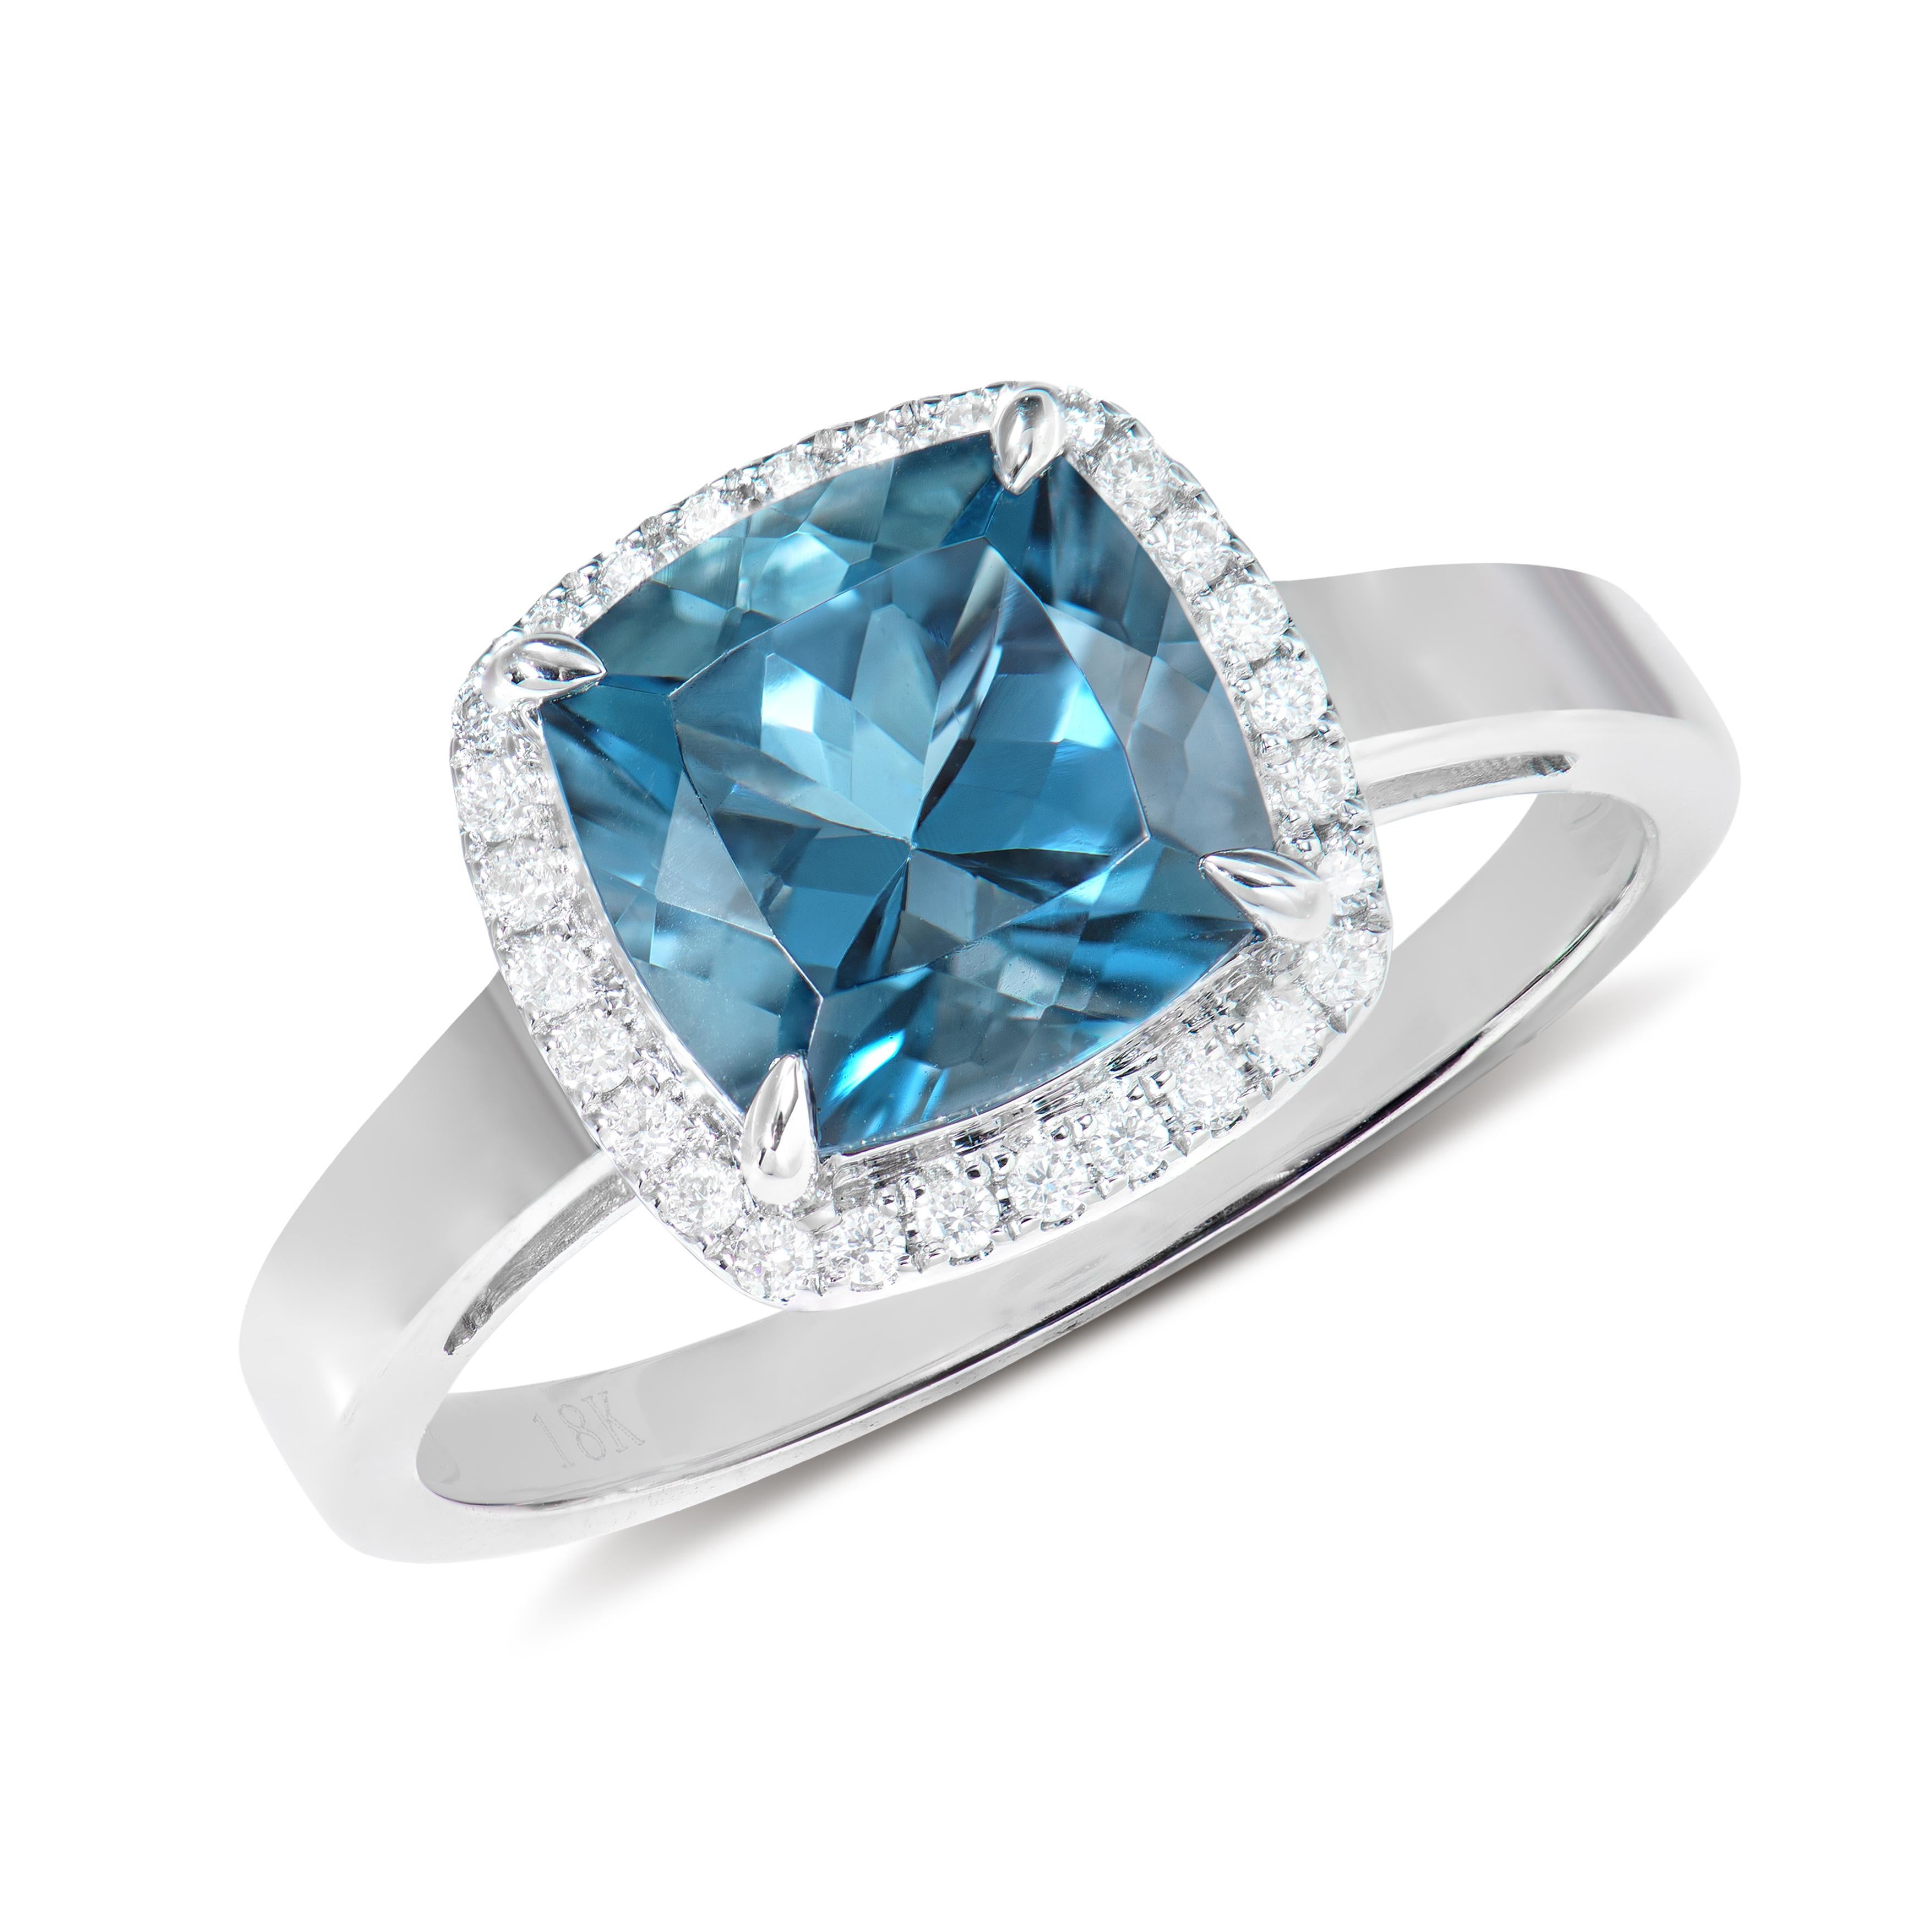 Cushion Cut 2.69 Carat London Blue Topaz Fancy Ring in 18Karat White Gold with White Diamond For Sale